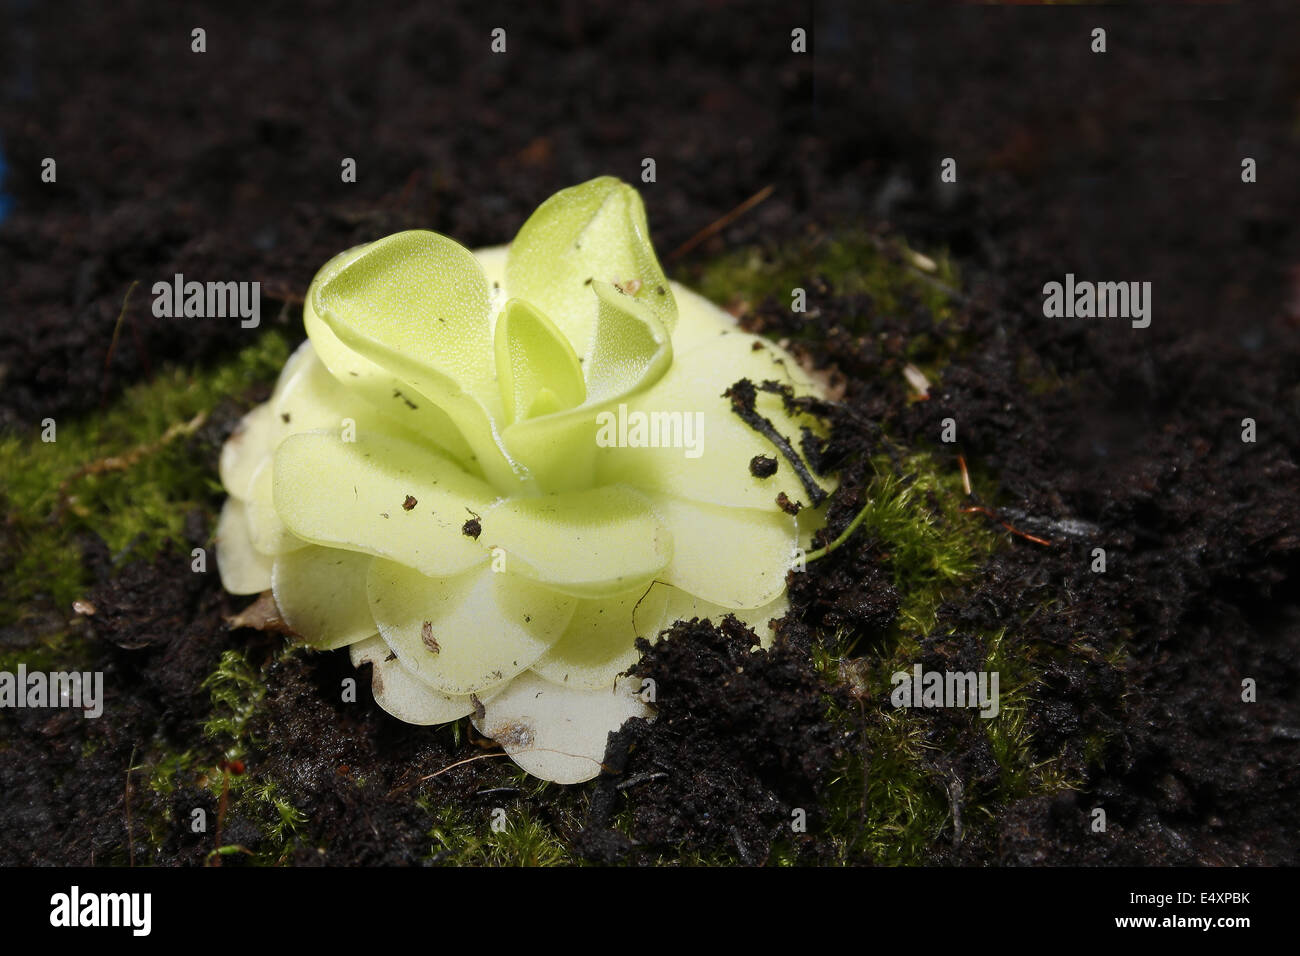 close up image of butterwort carnivorous plant Pinguicula gigantea Stock Photo